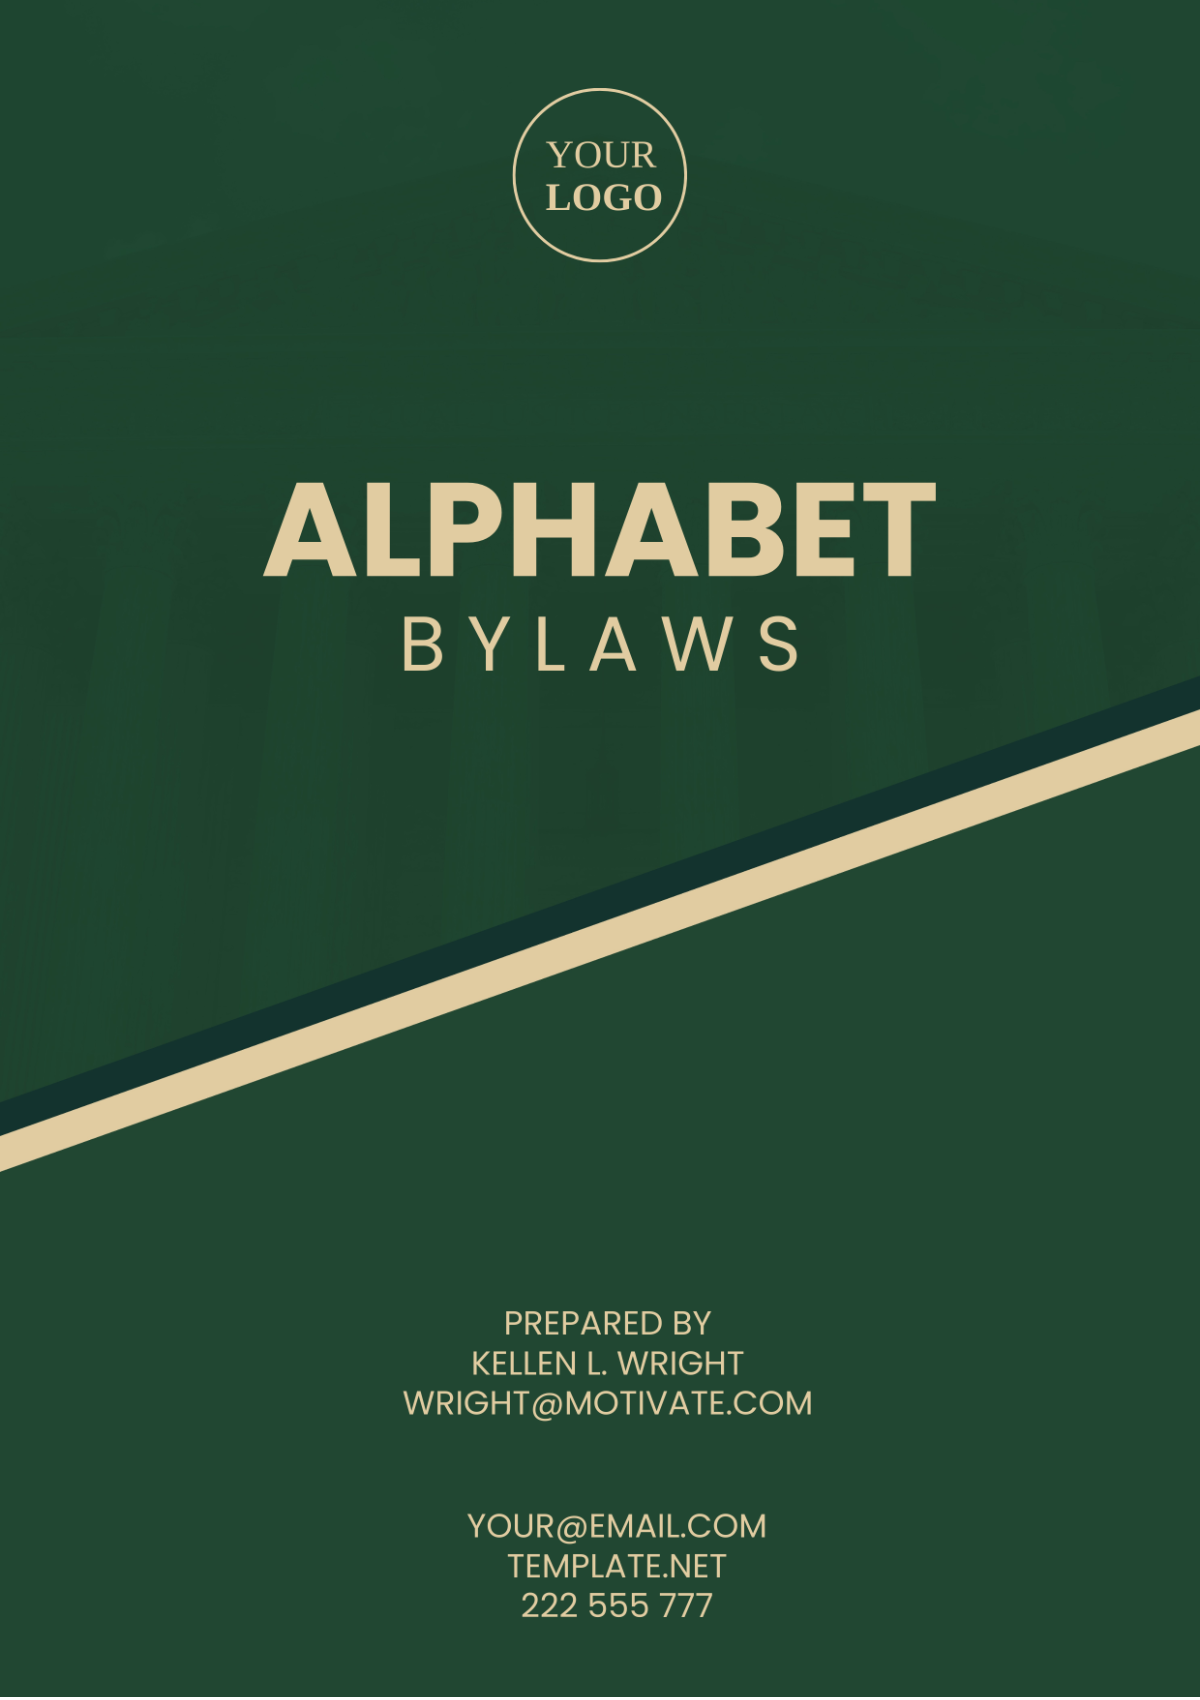 Alphabet Bylaws Template